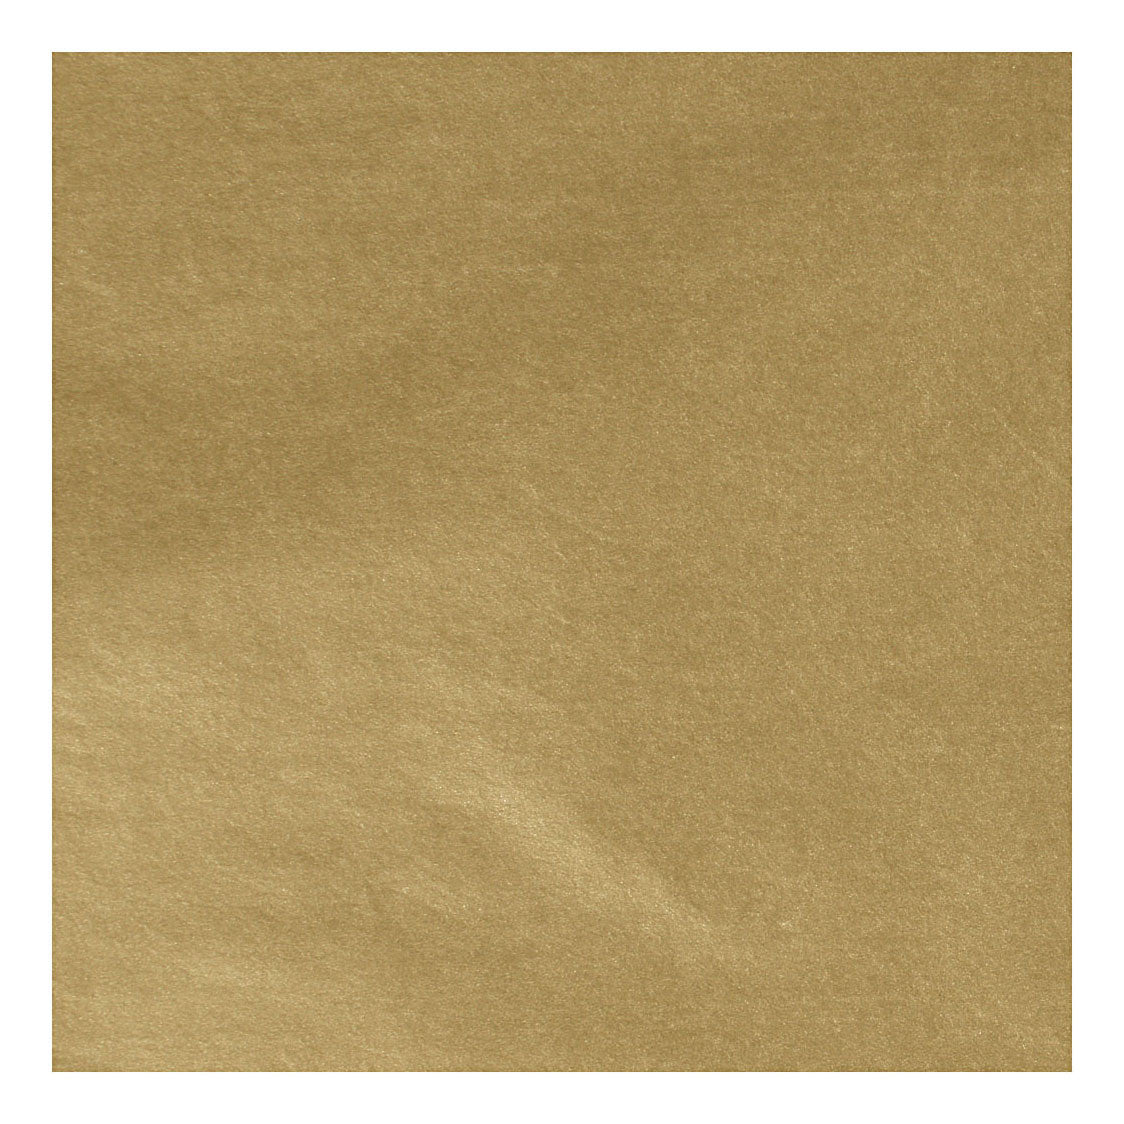 Creativ Company Carta velina oro 6 fogli 14 gr, 50x70cm